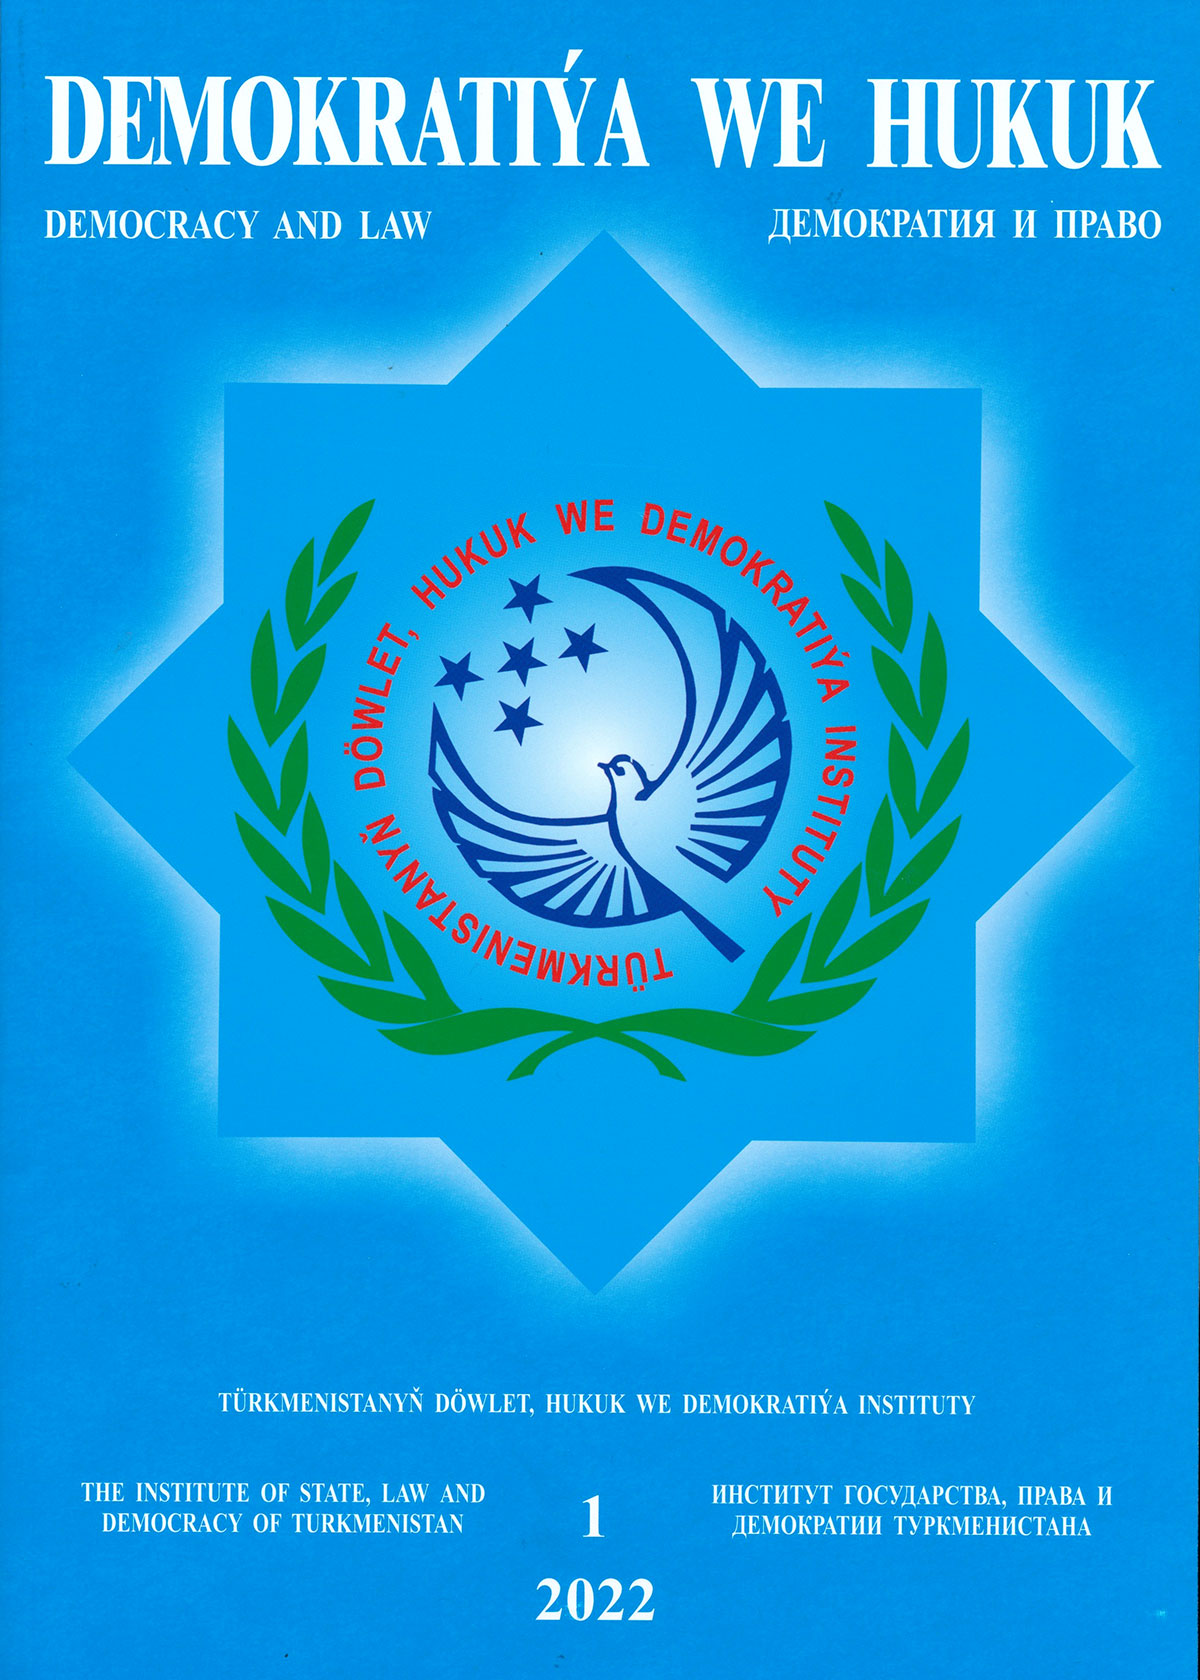 Strengthening the principles of democracy in Turkmen society